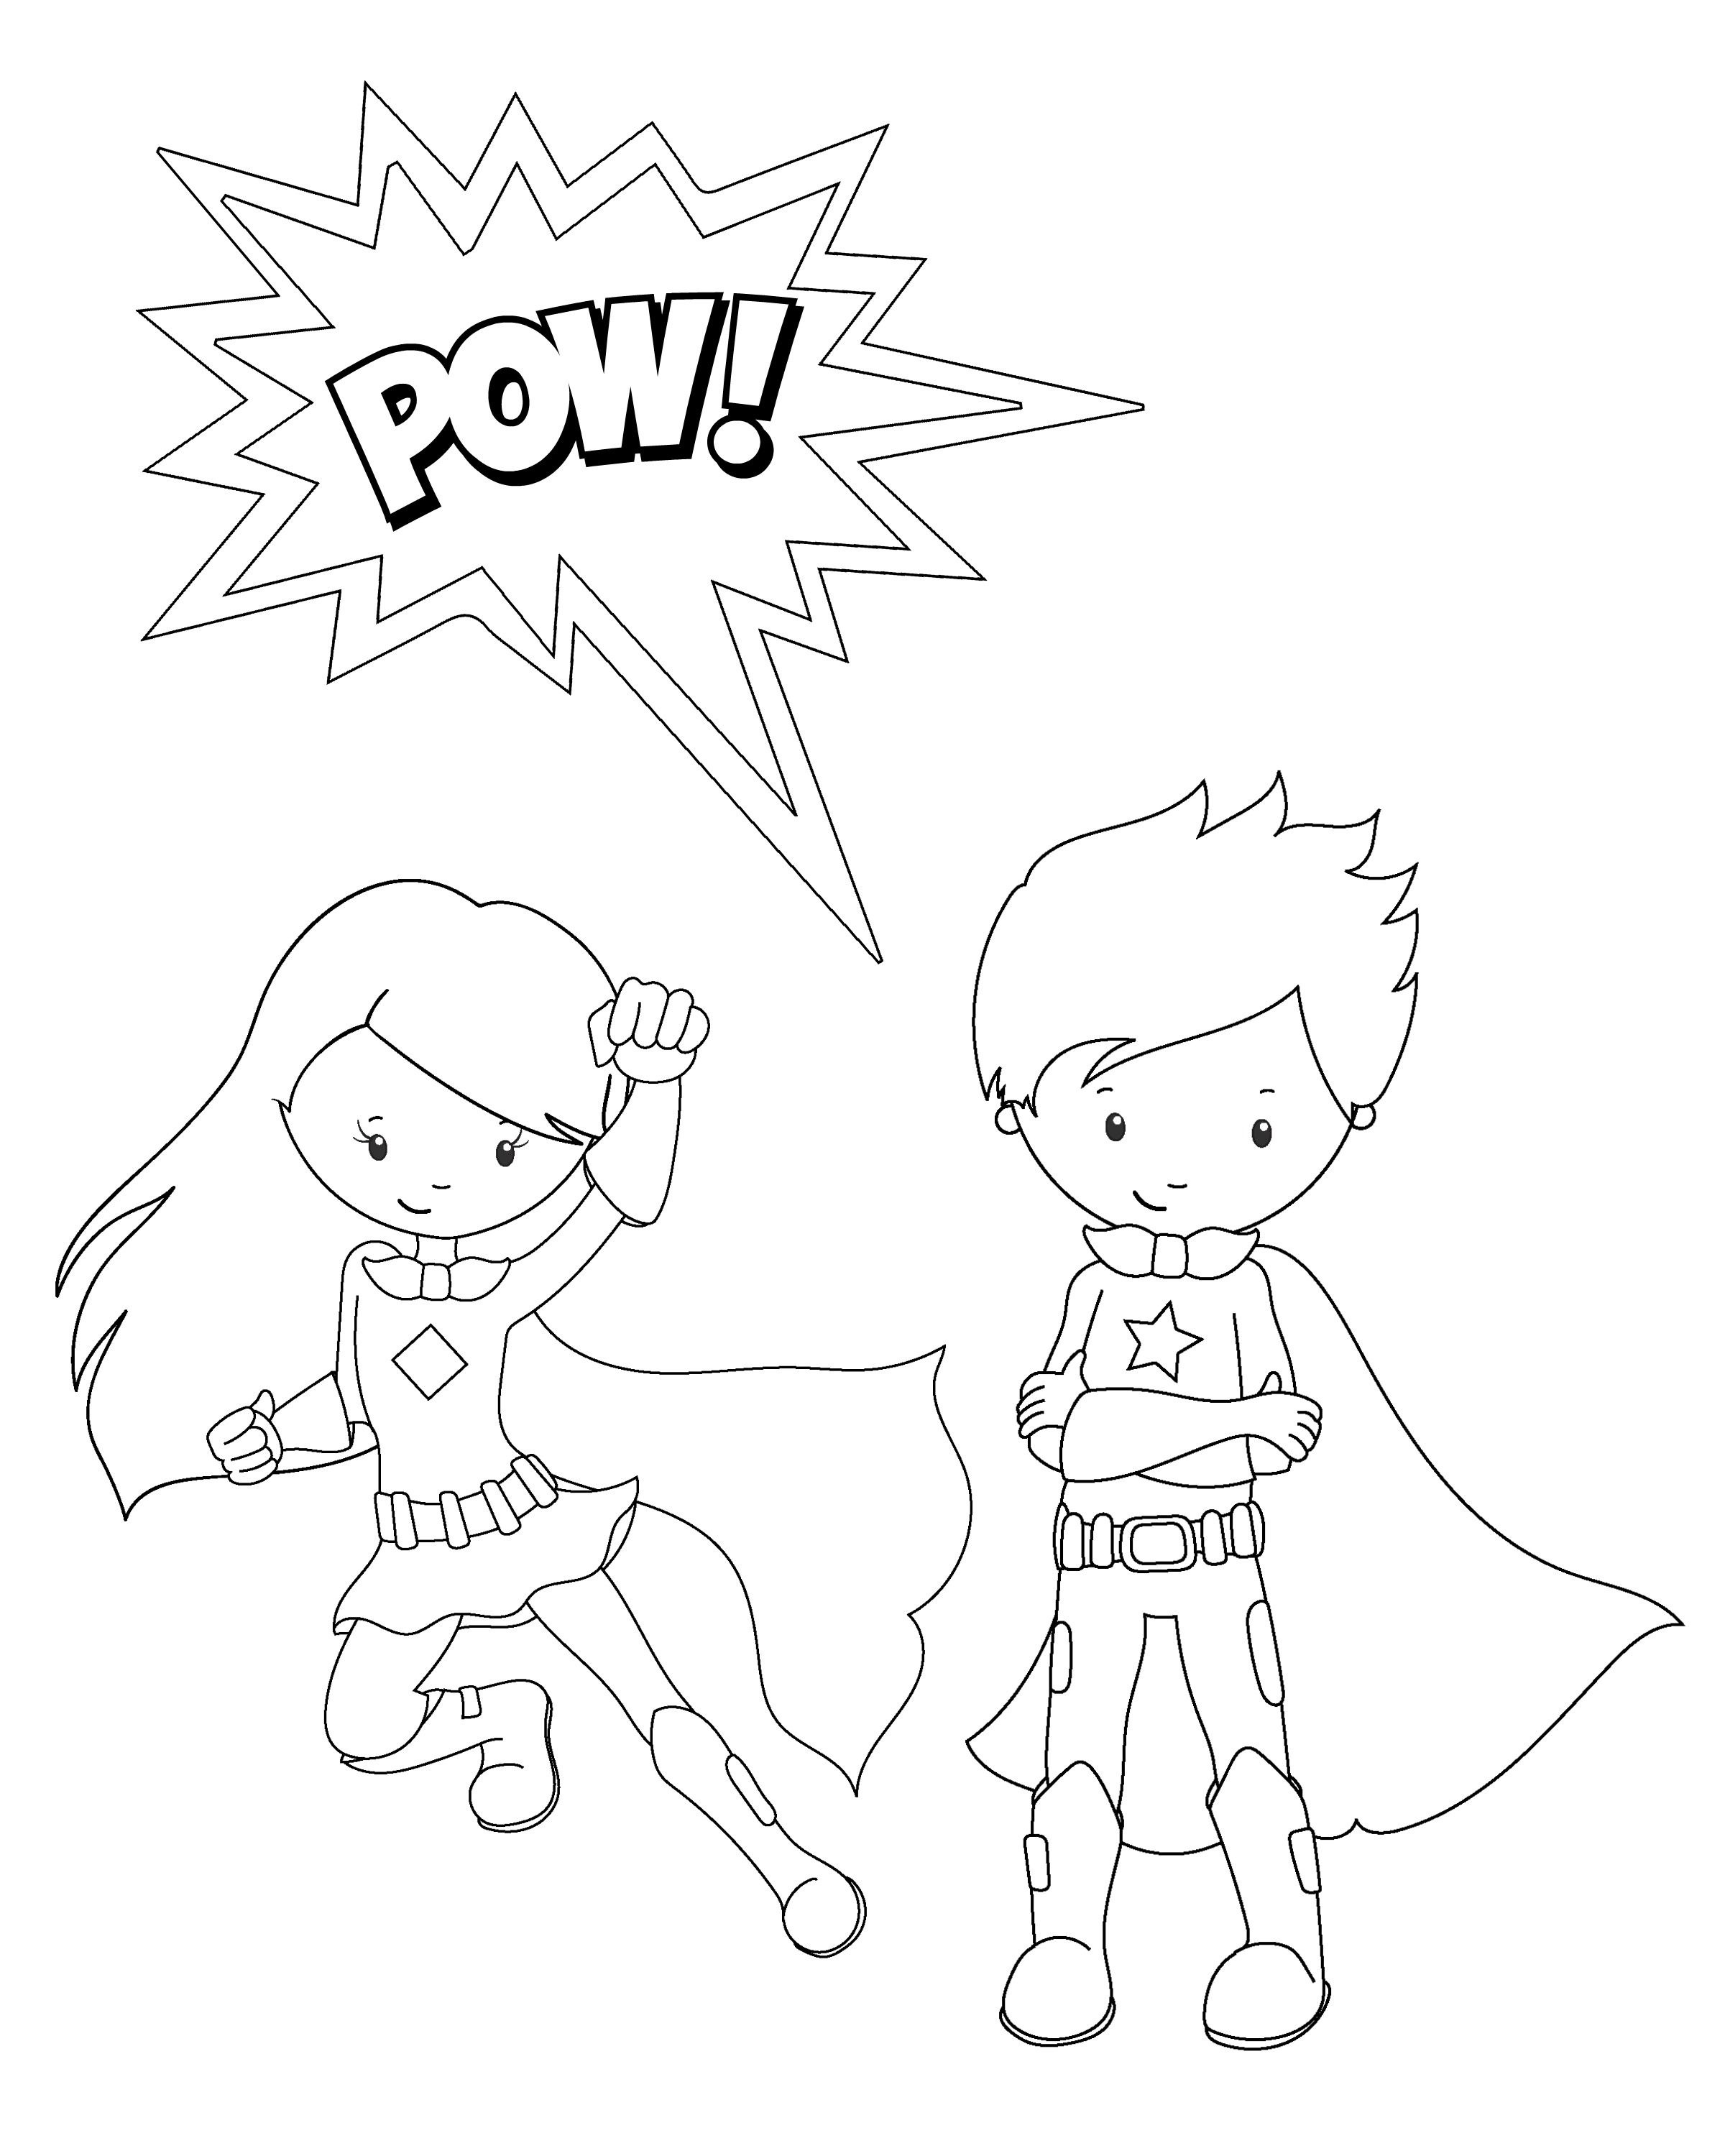 Super Hero Coloring Page Free Superhero Coloring Pages Free Printable Superhero Coloring